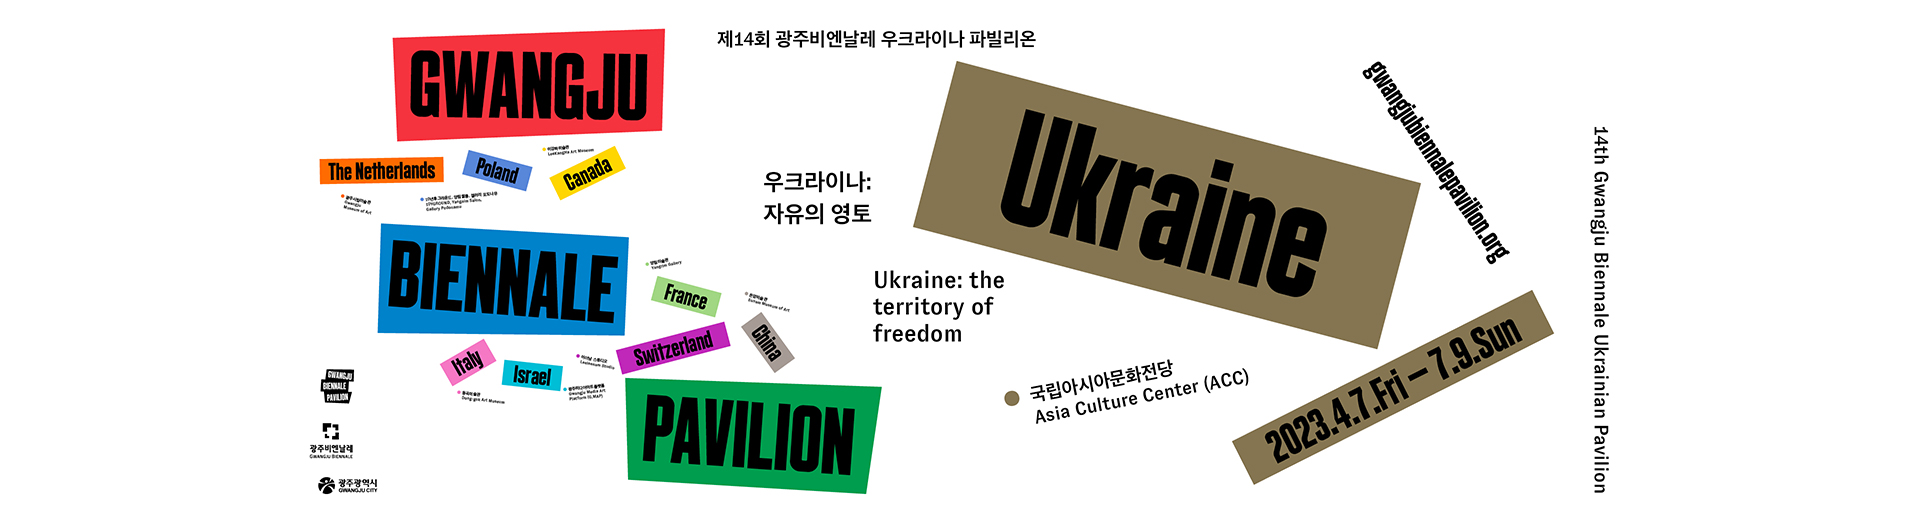 The 14th Gwangju Biennale Ukrainian Pavilion